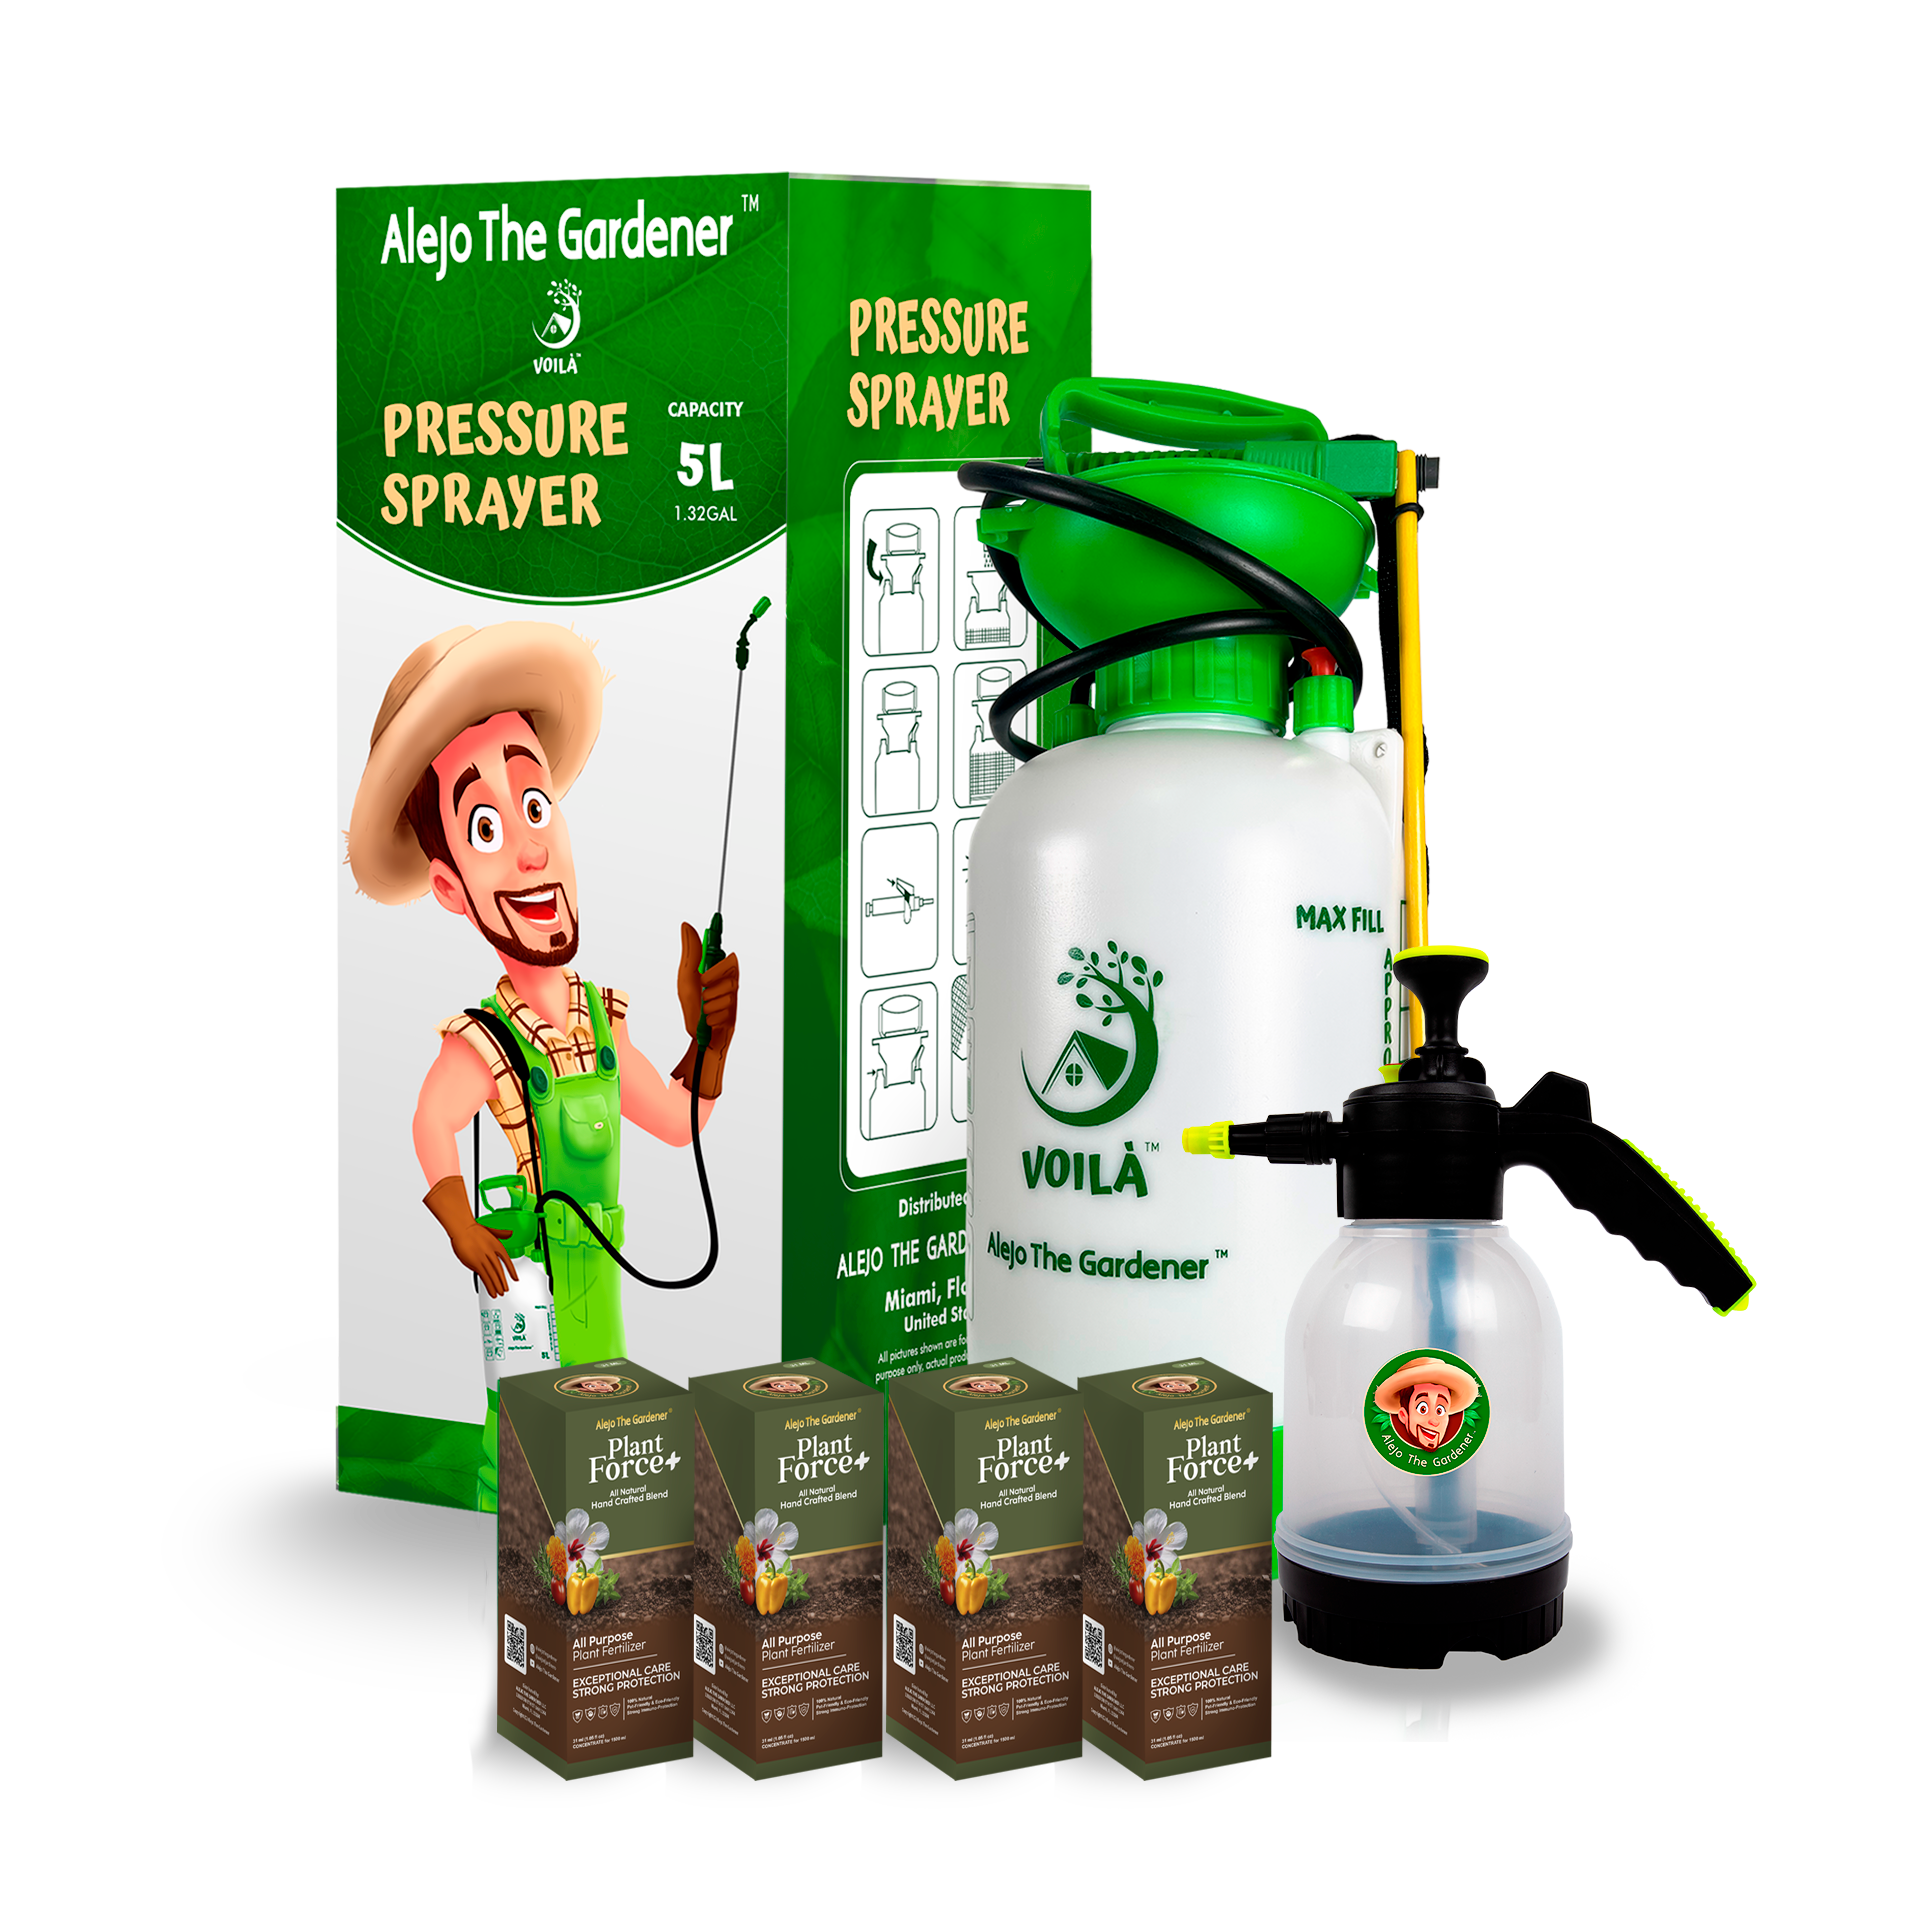 Complete Set: Plant Force+ x4 + Pump Sprayers